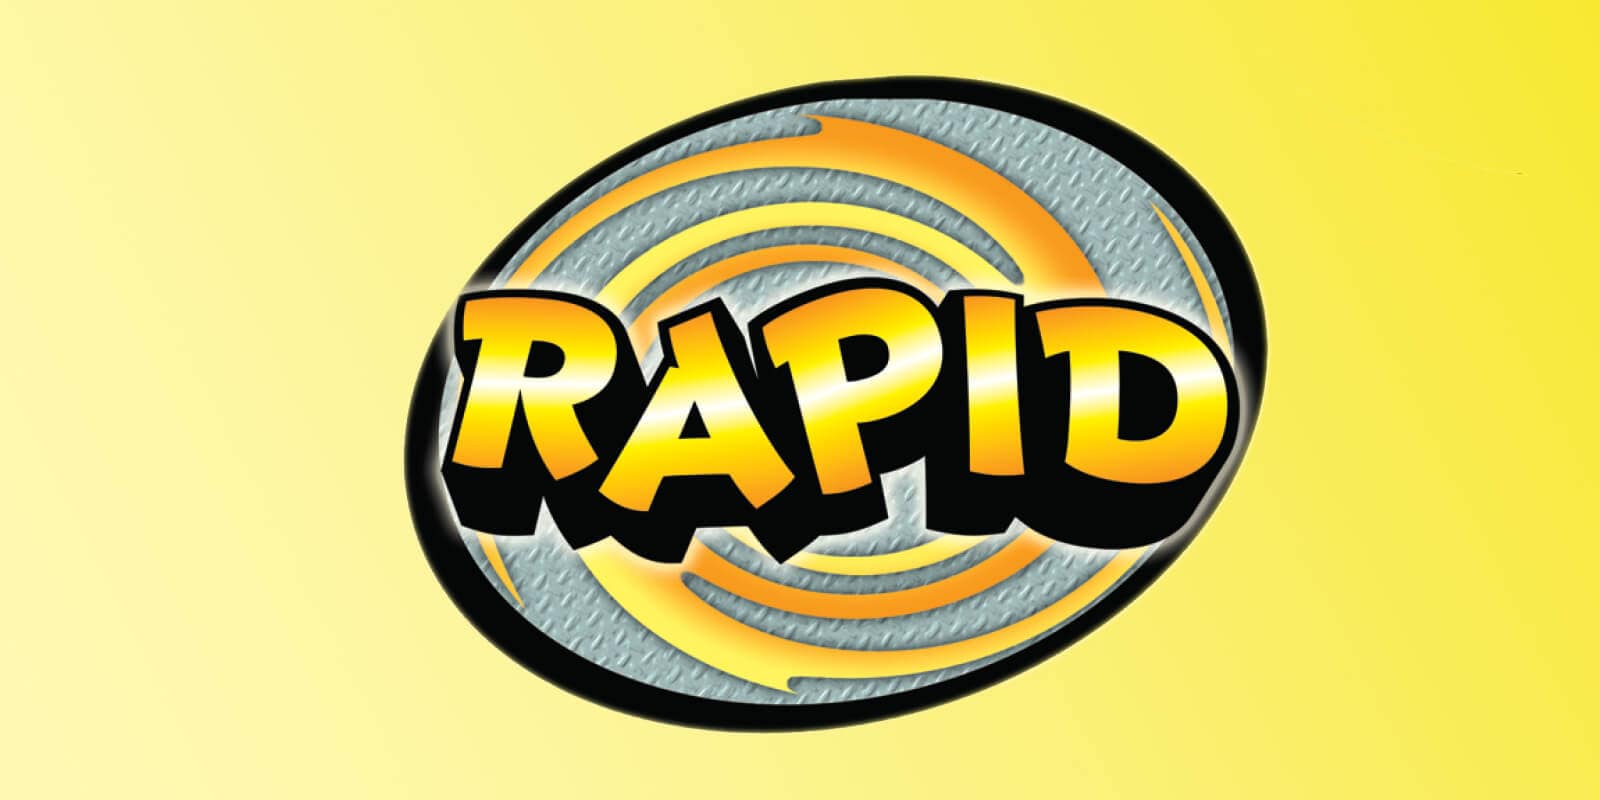 Rapid logo